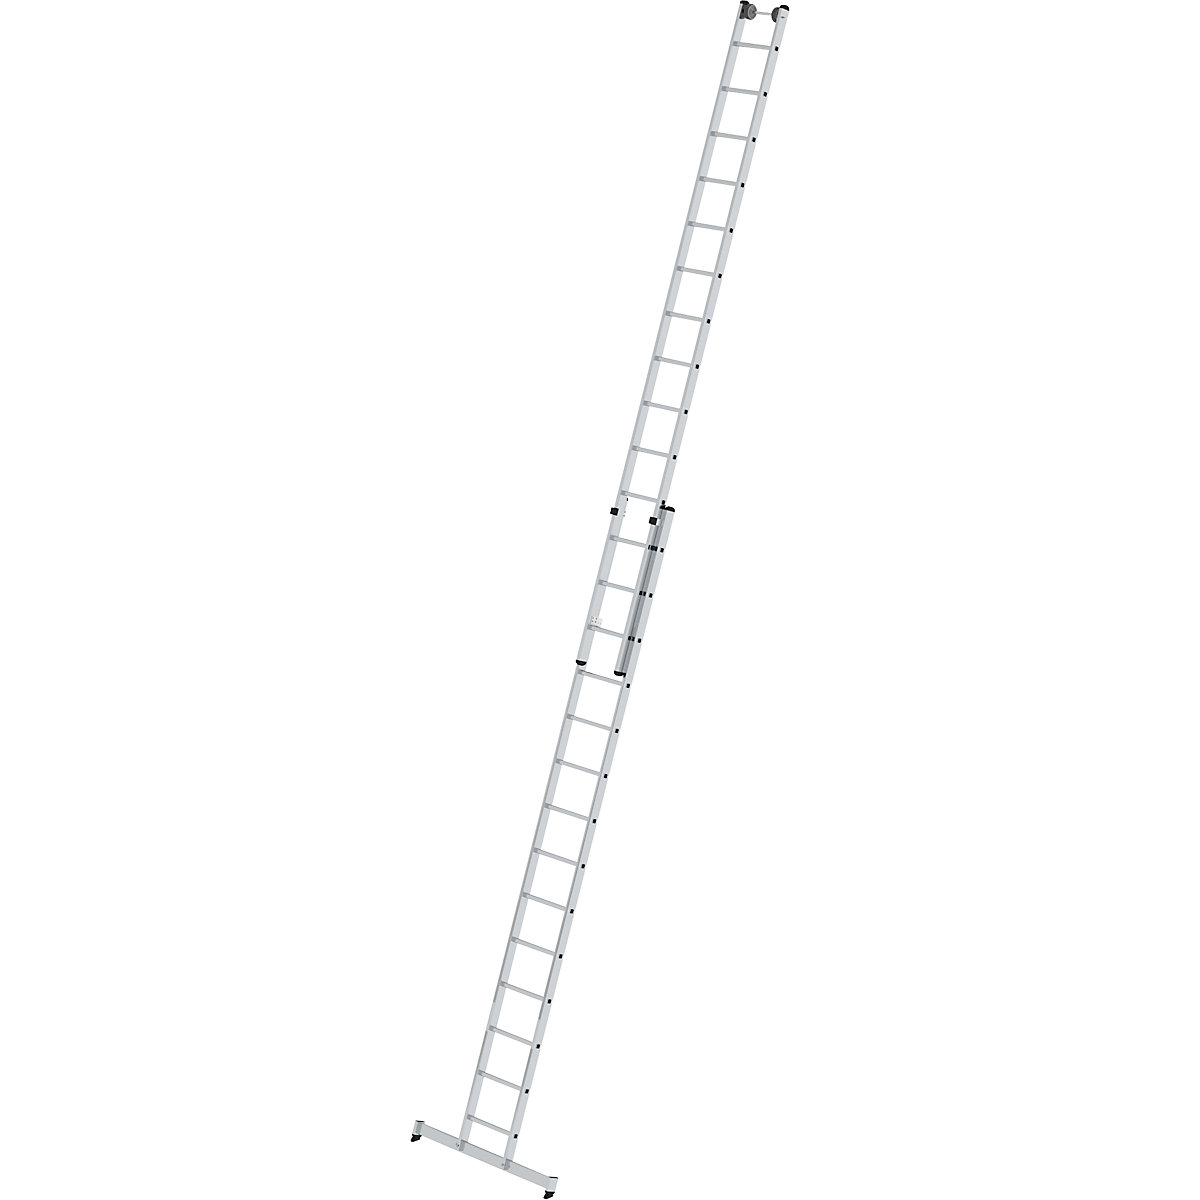 https://images.kkeu.de/is/image/BEG/Ladders_Scaffolding/Lean_to_ladders/Height_adjustable_lean-to_ladder_pdplarge-mrd--000044002207_PRD_org_all.jpg